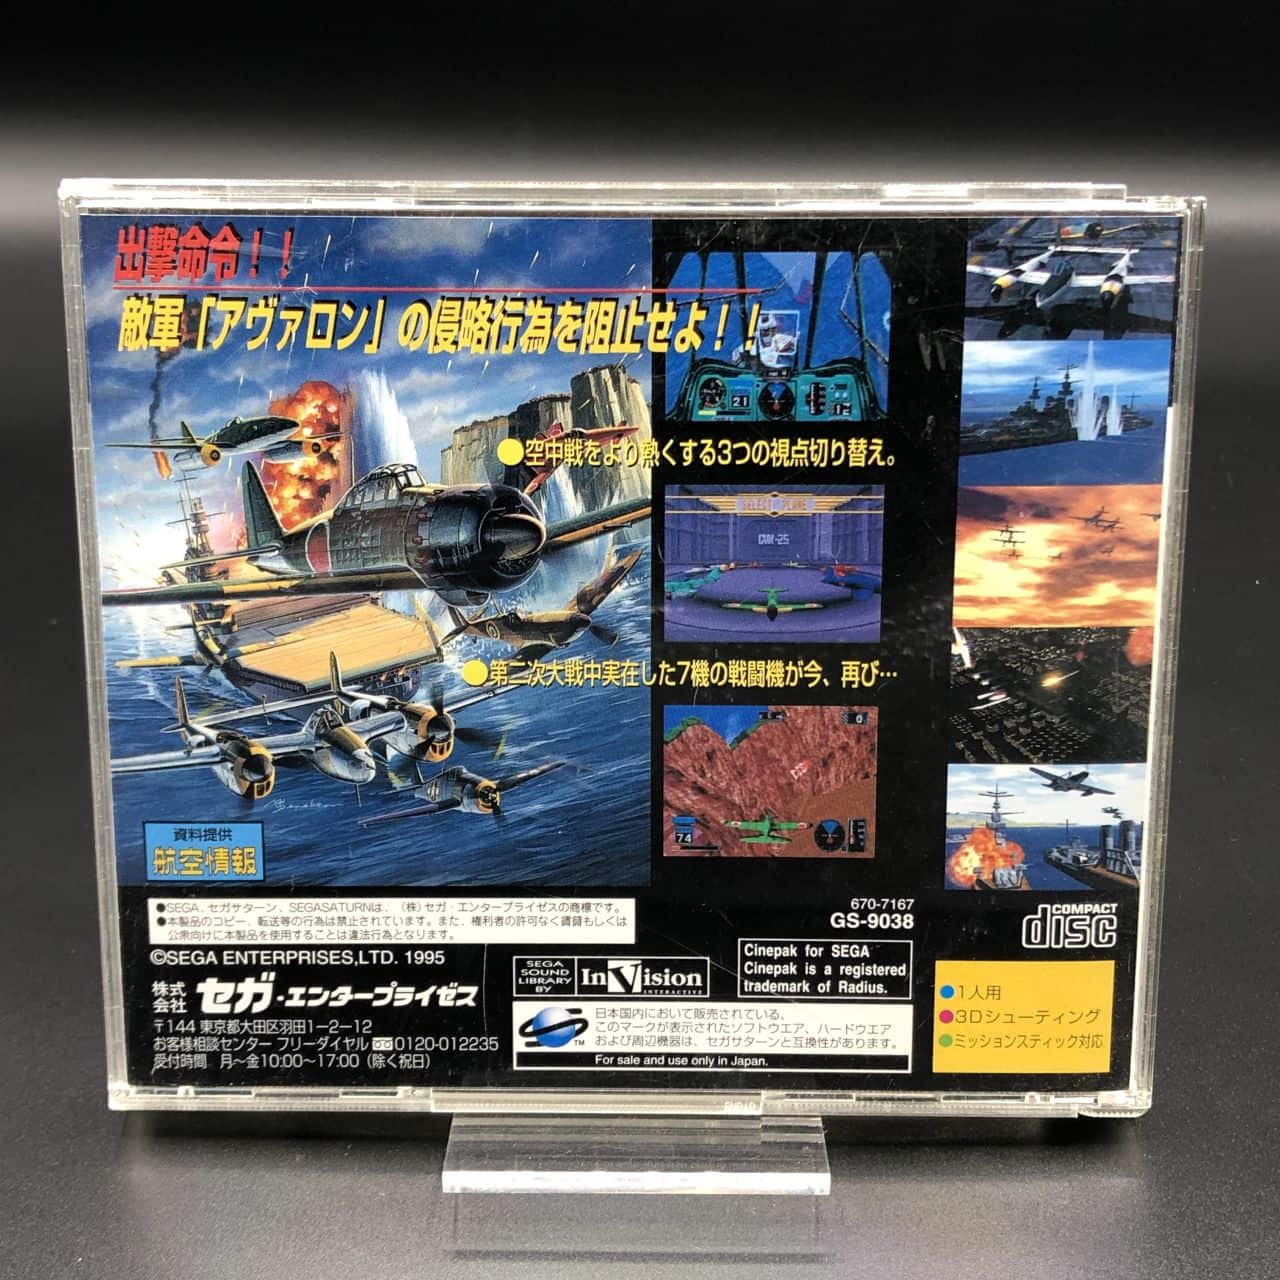 Wing Arms (Import Japan) (Komplett) (Gebrauchsspuren) Sega Saturn